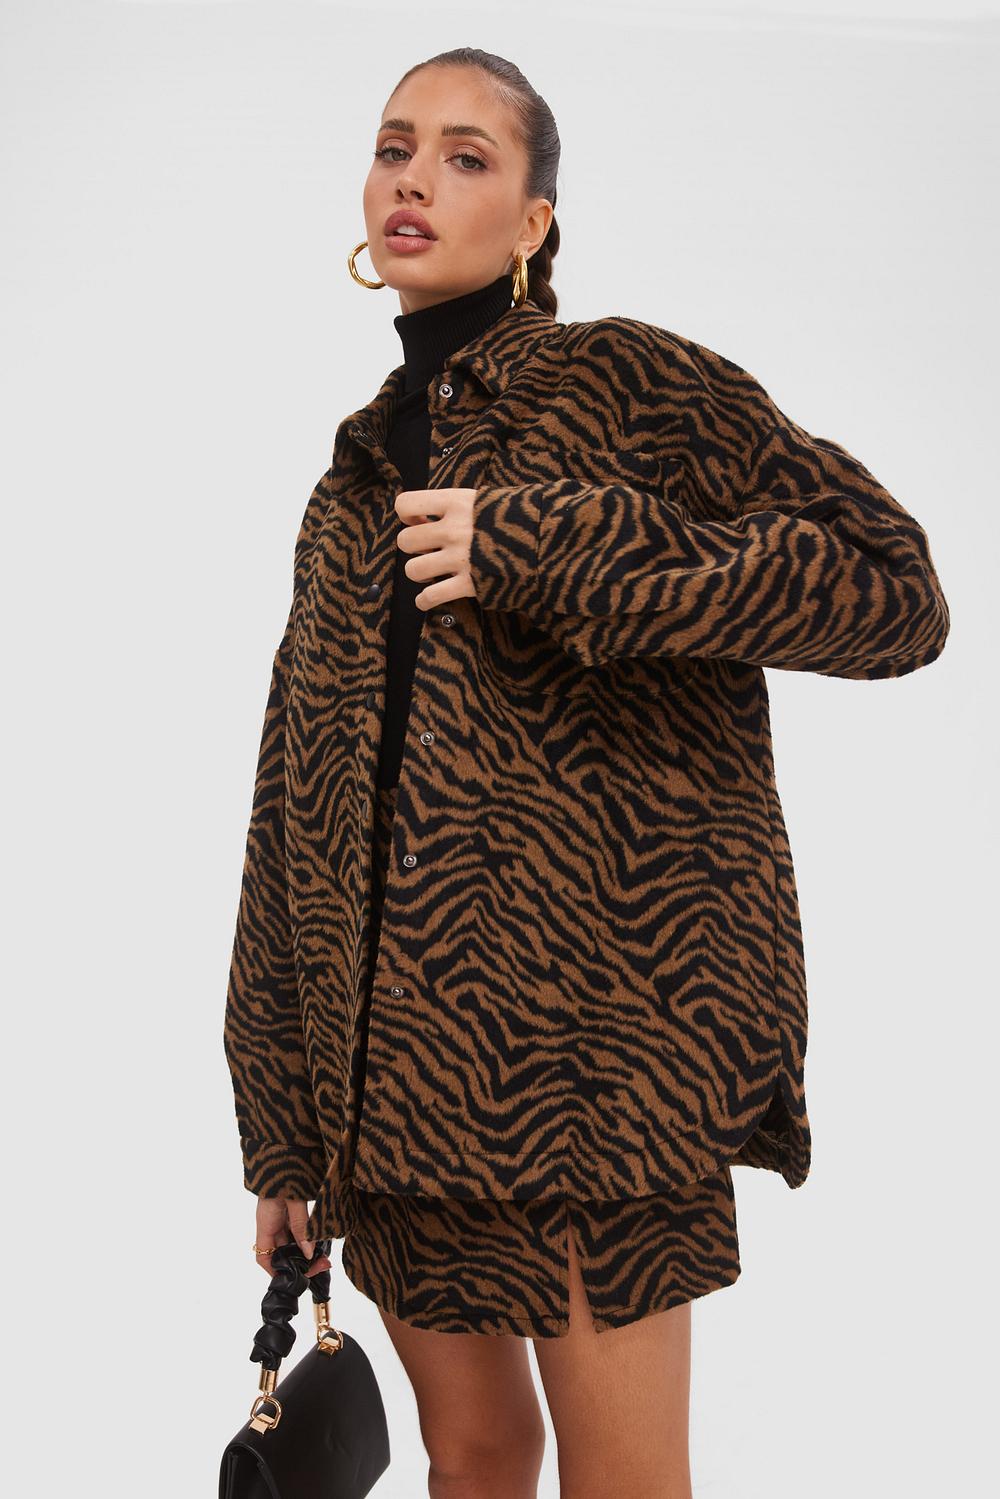 Brown zebra print jacket